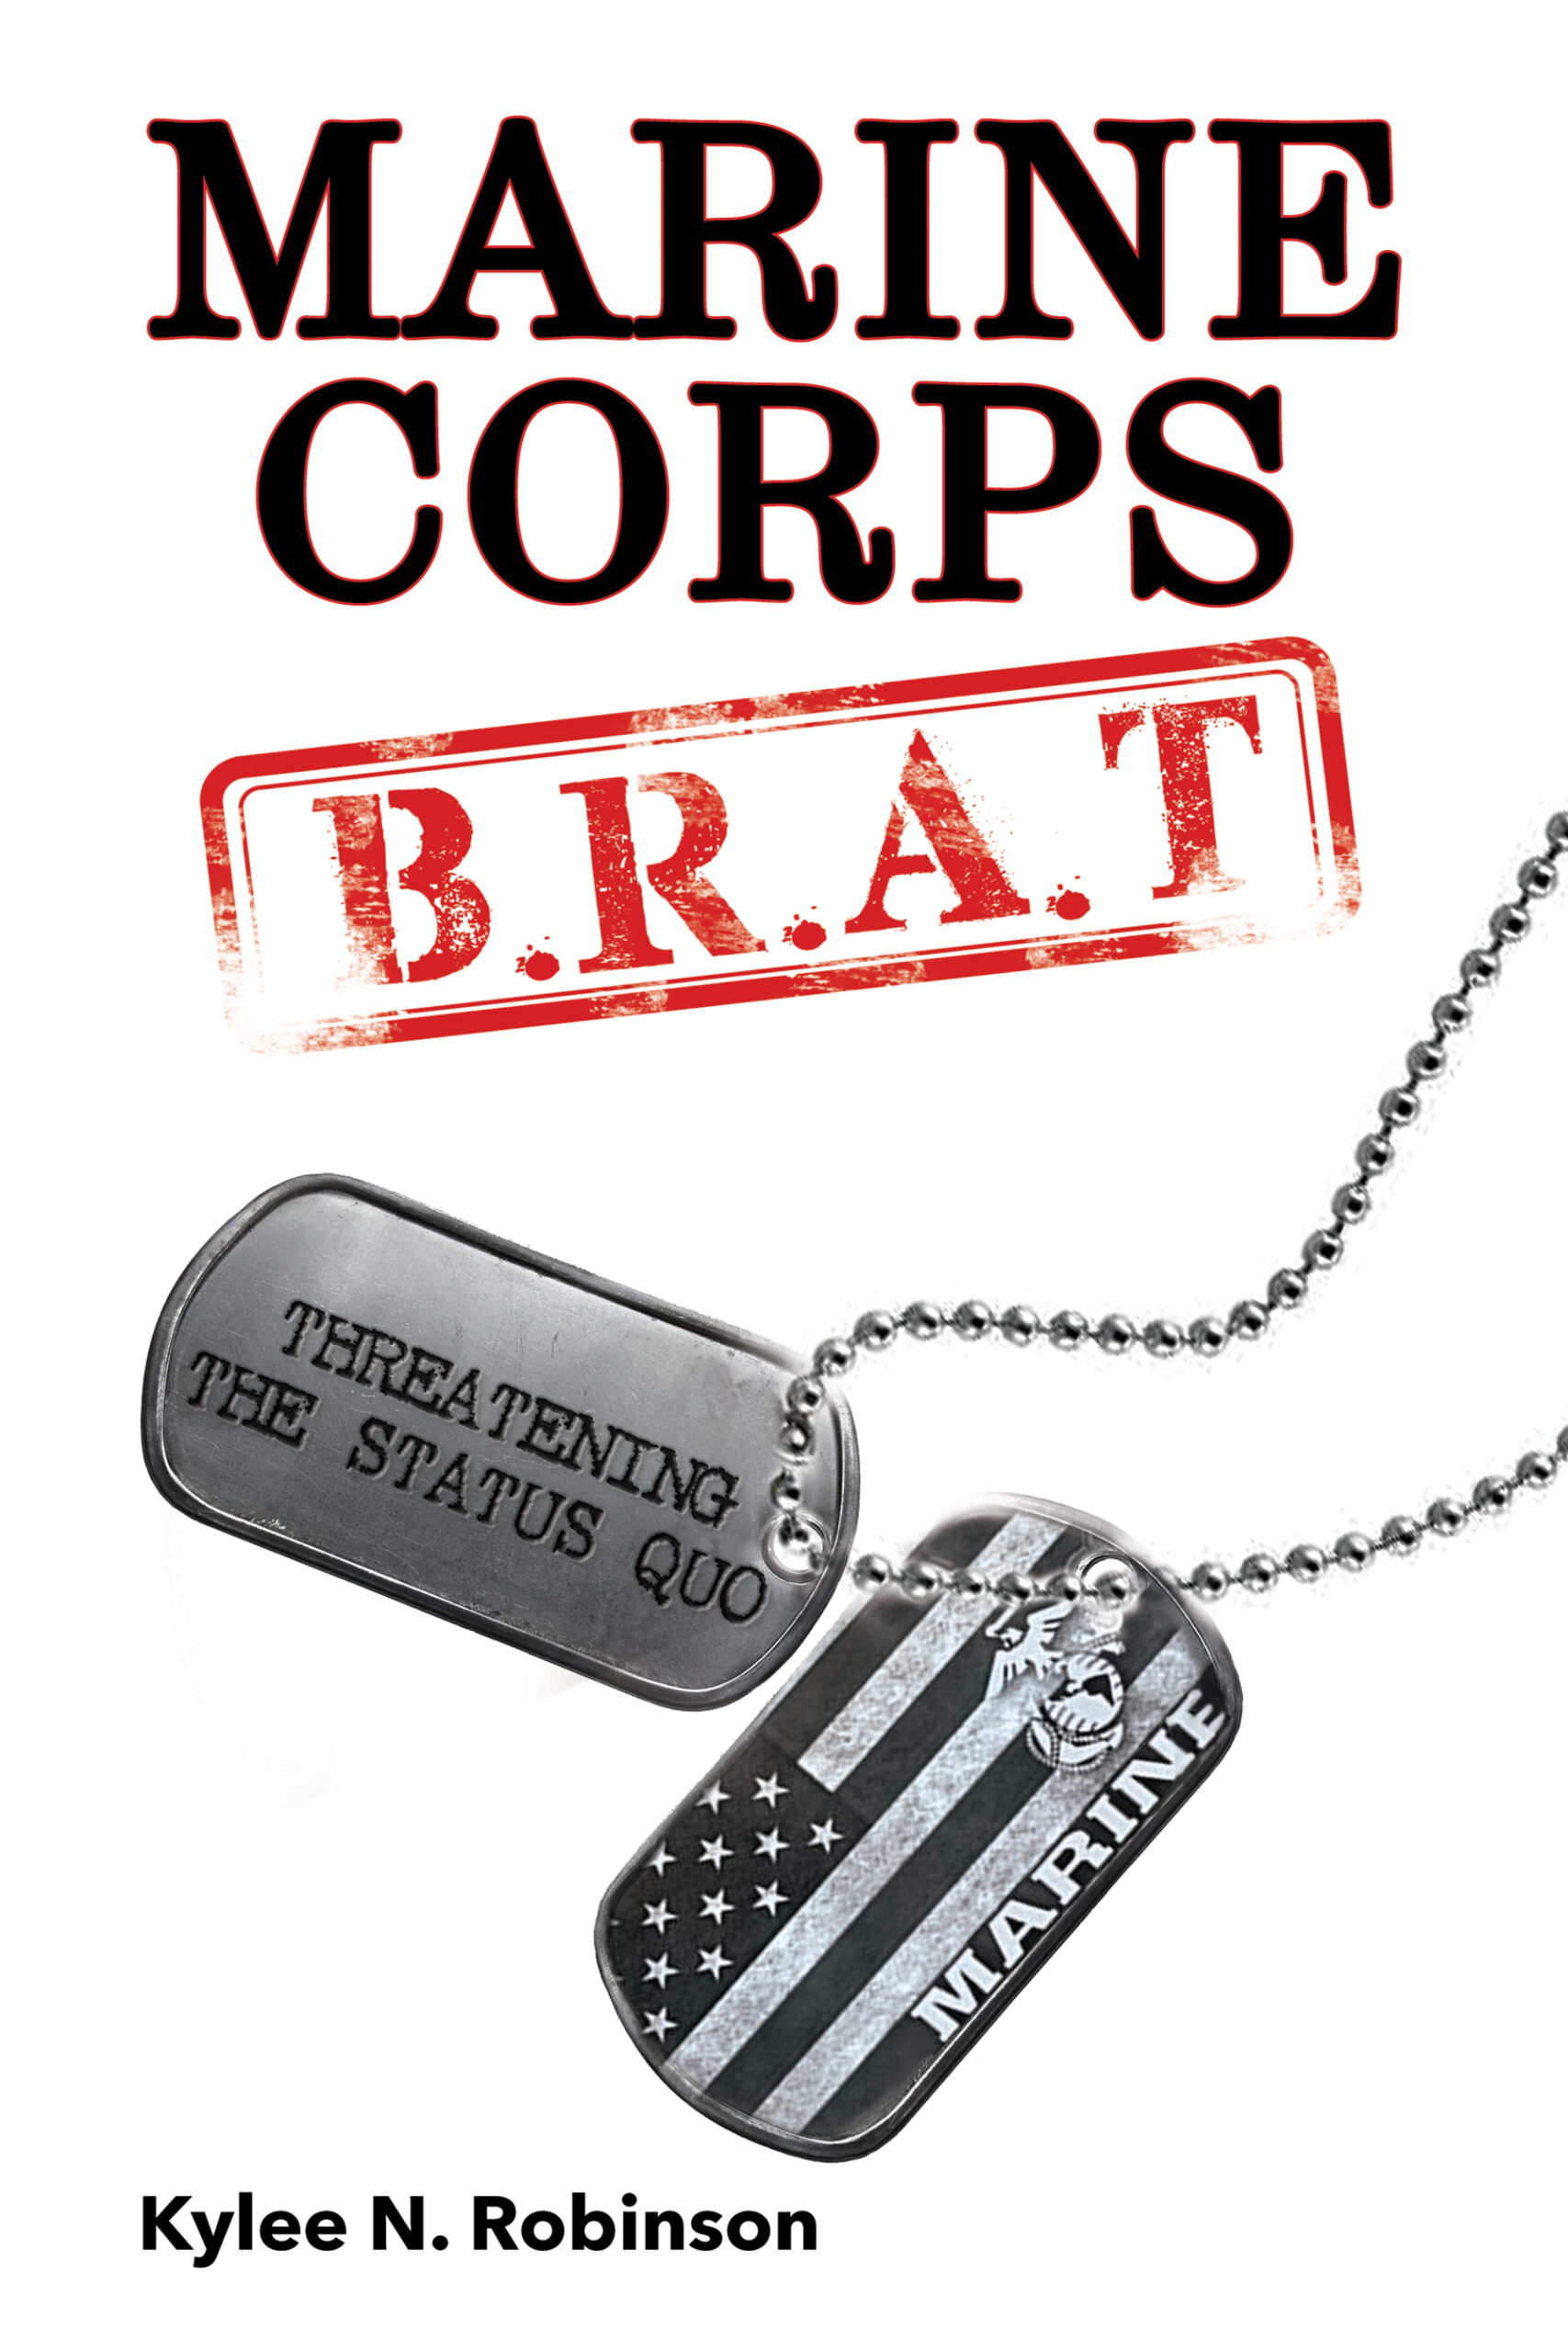 FREE: Marine Corps B.R.A.T. by Kylee N. Robinson